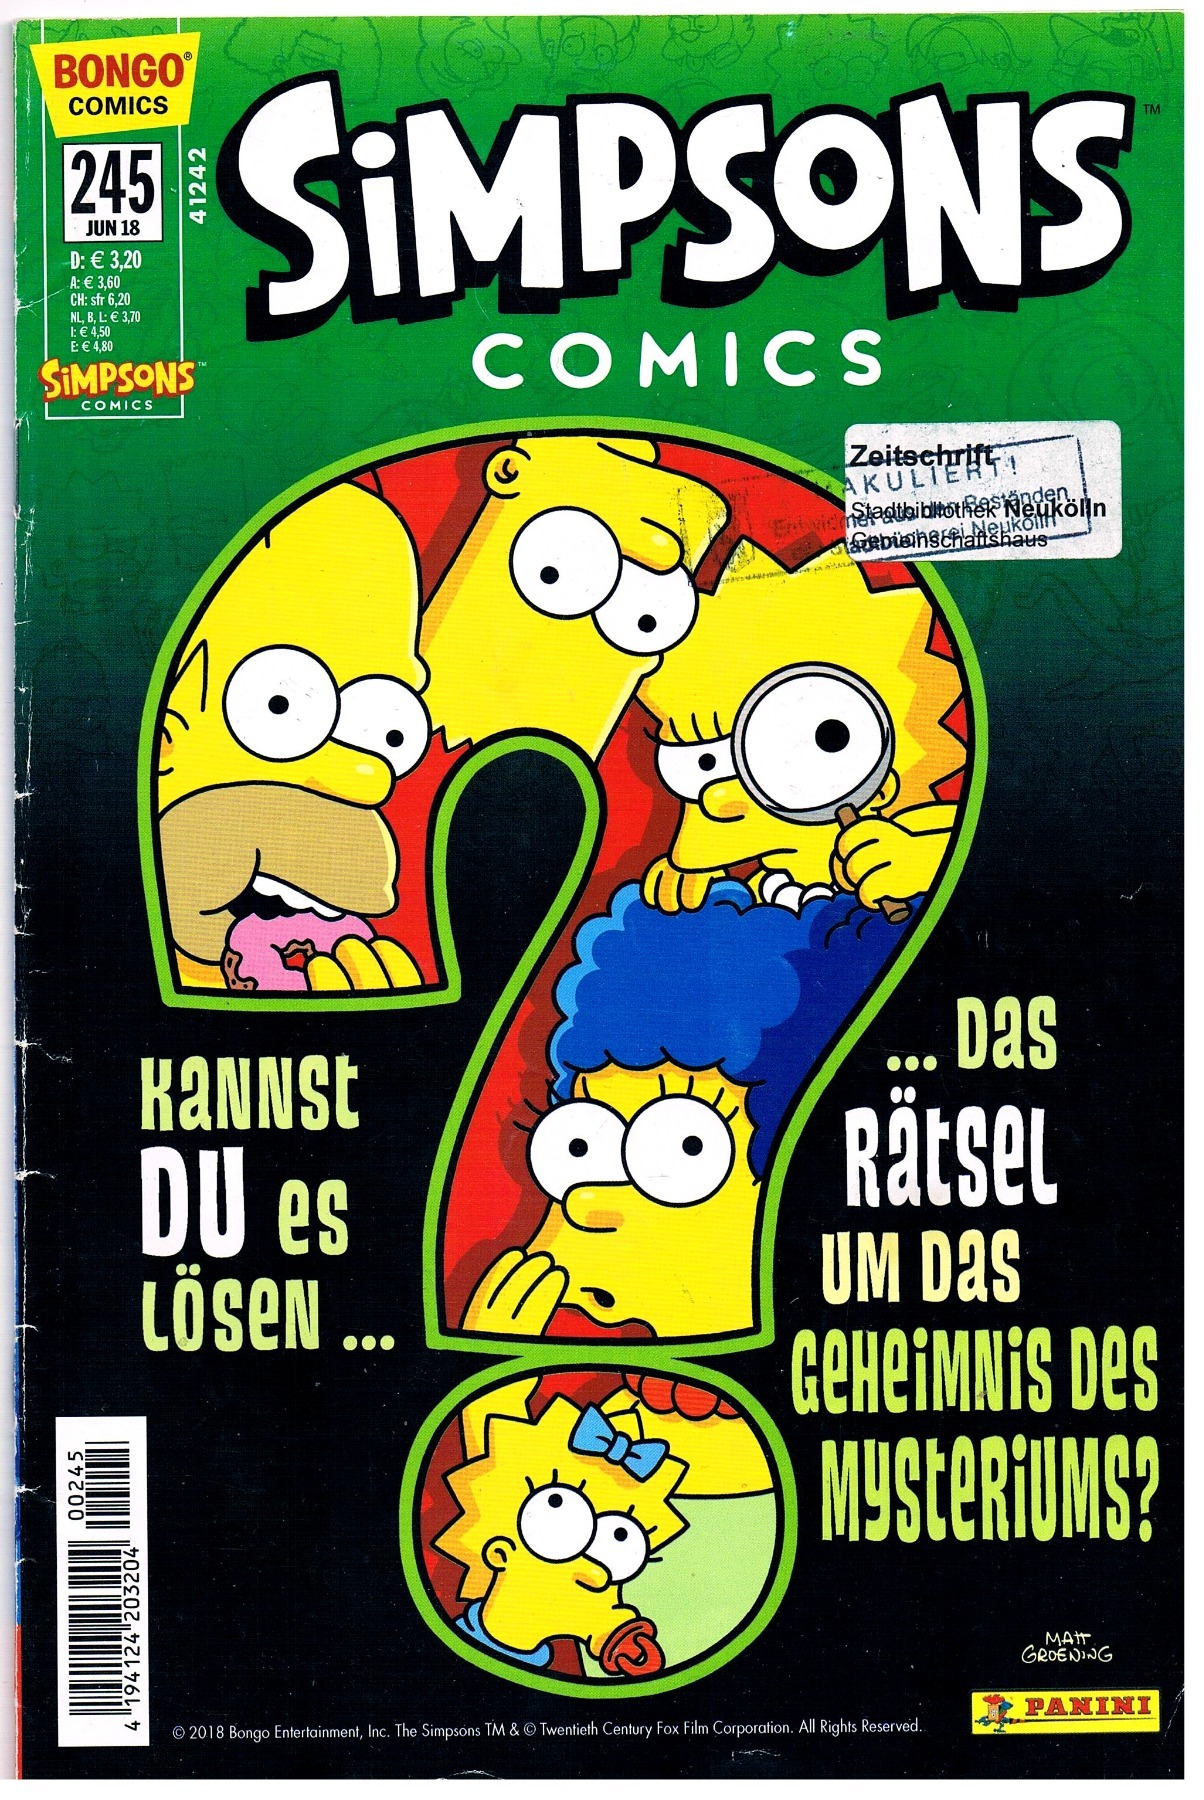 Simpsons Comics - Issue 245 - Jun 18 2018